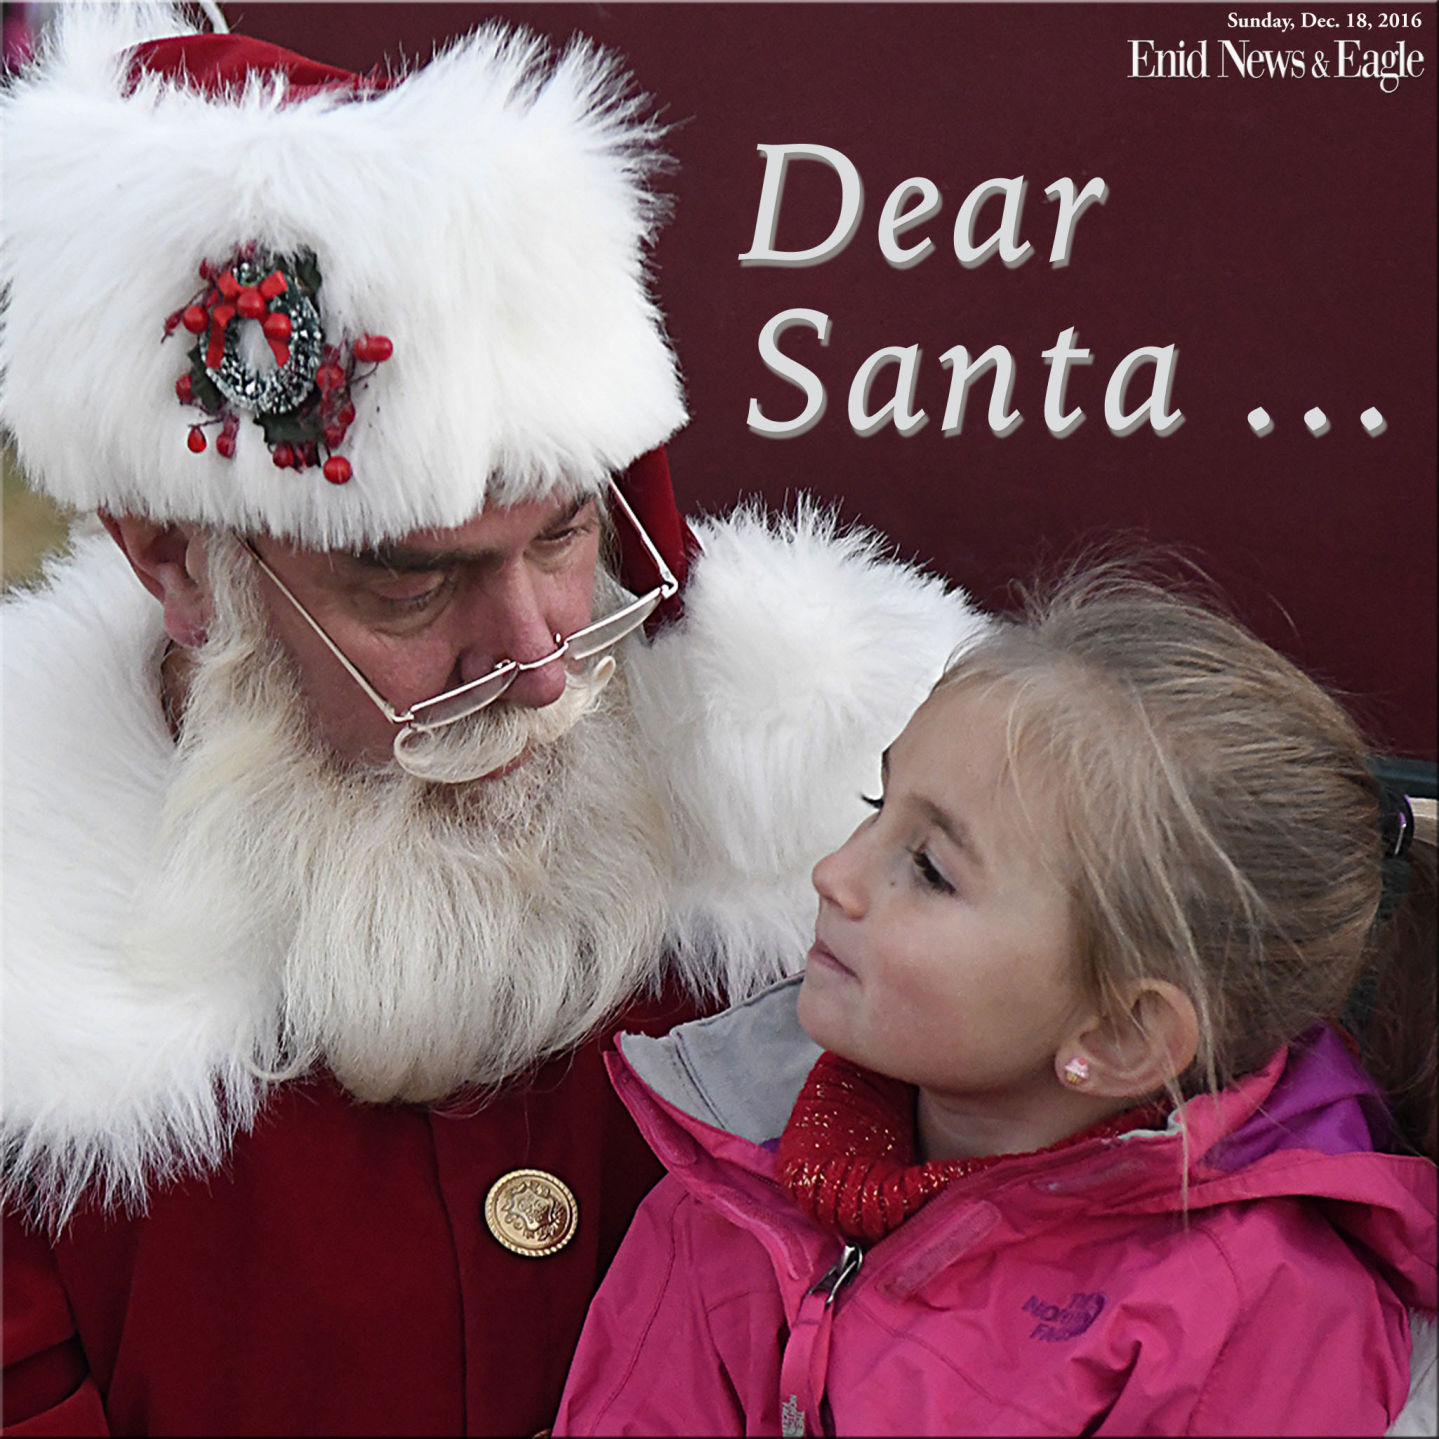 Dear Santa: Santa letters published for 2016 | News | enidnews.com